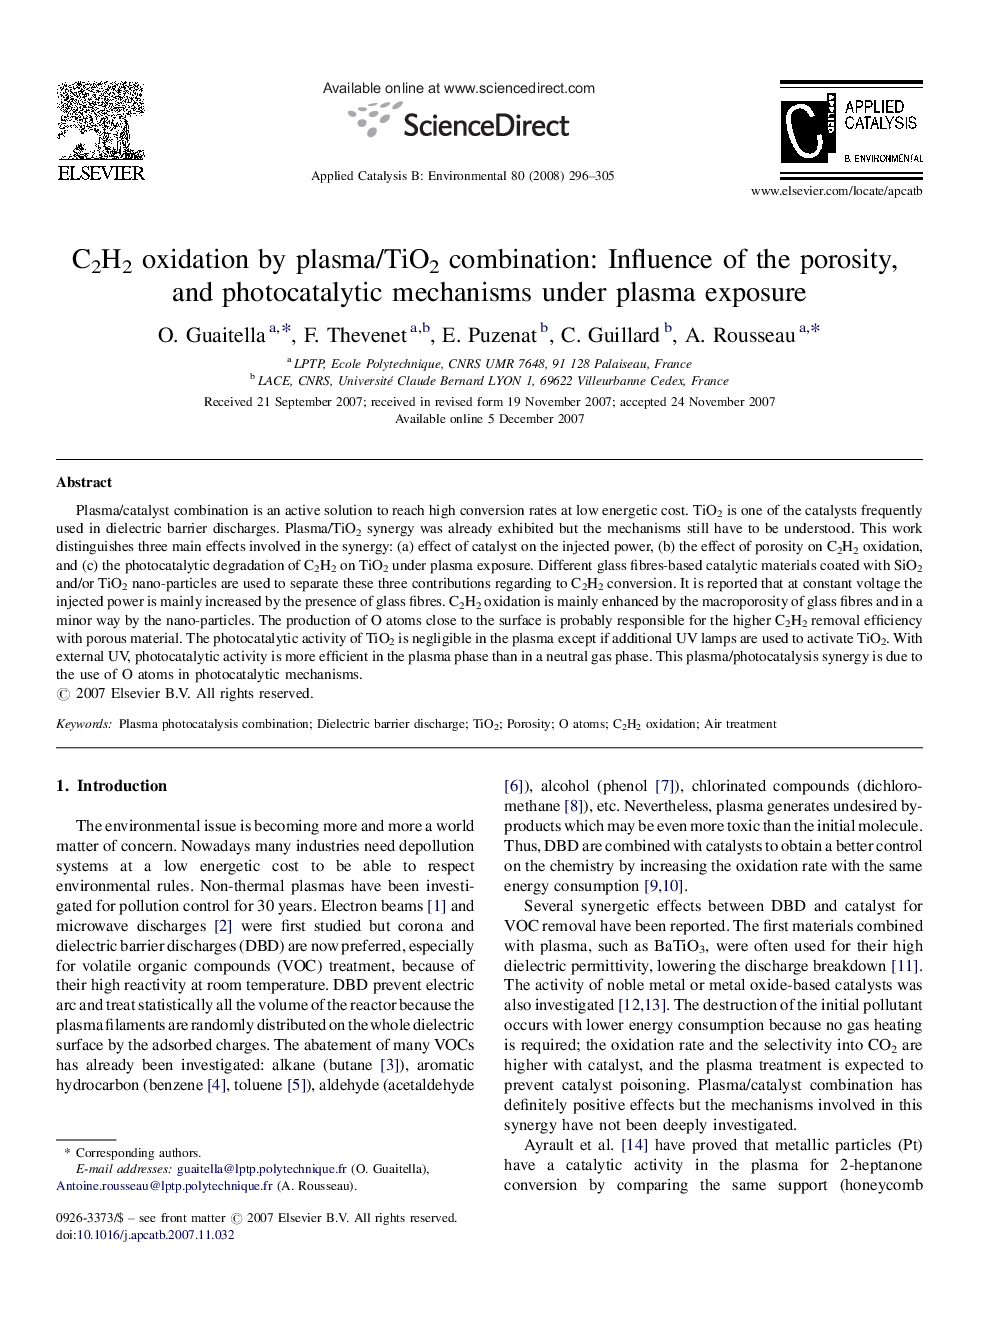 C2H2 oxidation by plasma/TiO2 combination: Influence of the porosity, and photocatalytic mechanisms under plasma exposure